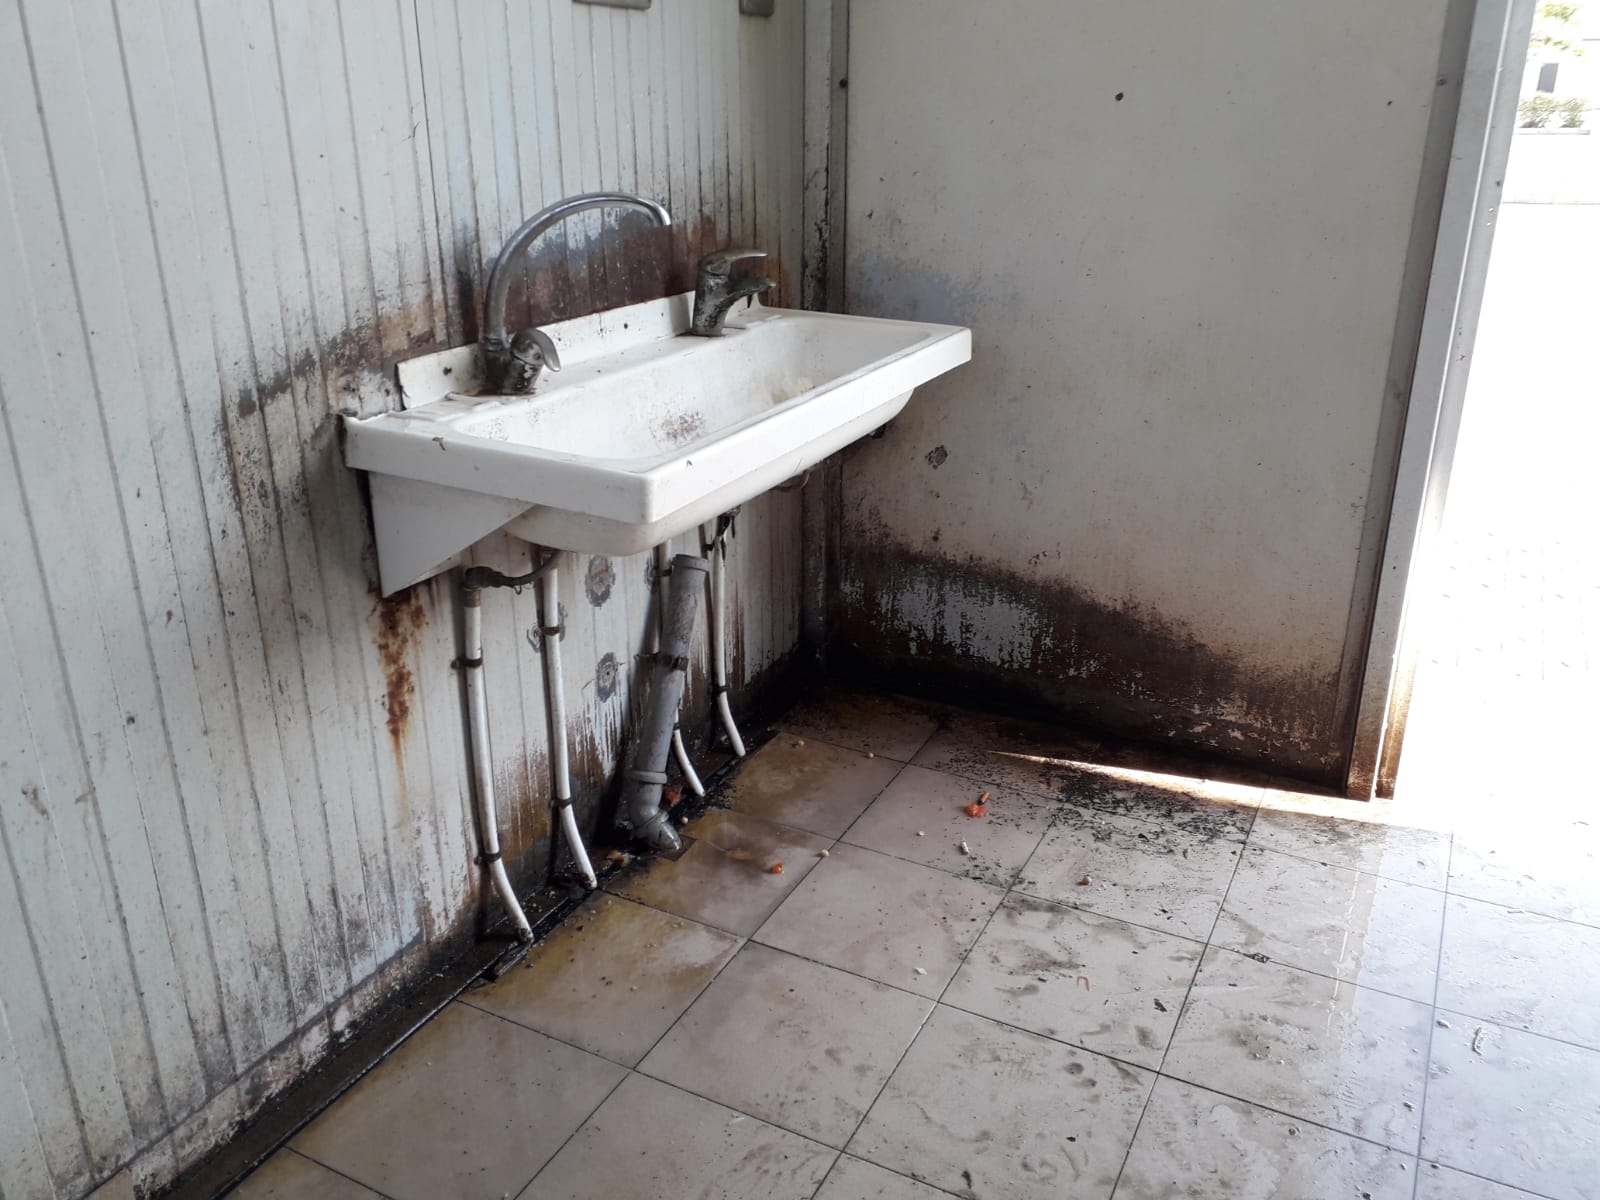   A housing camp bathroom, near Foggia, Italy. July, 2018. © Pamela Kerpius  